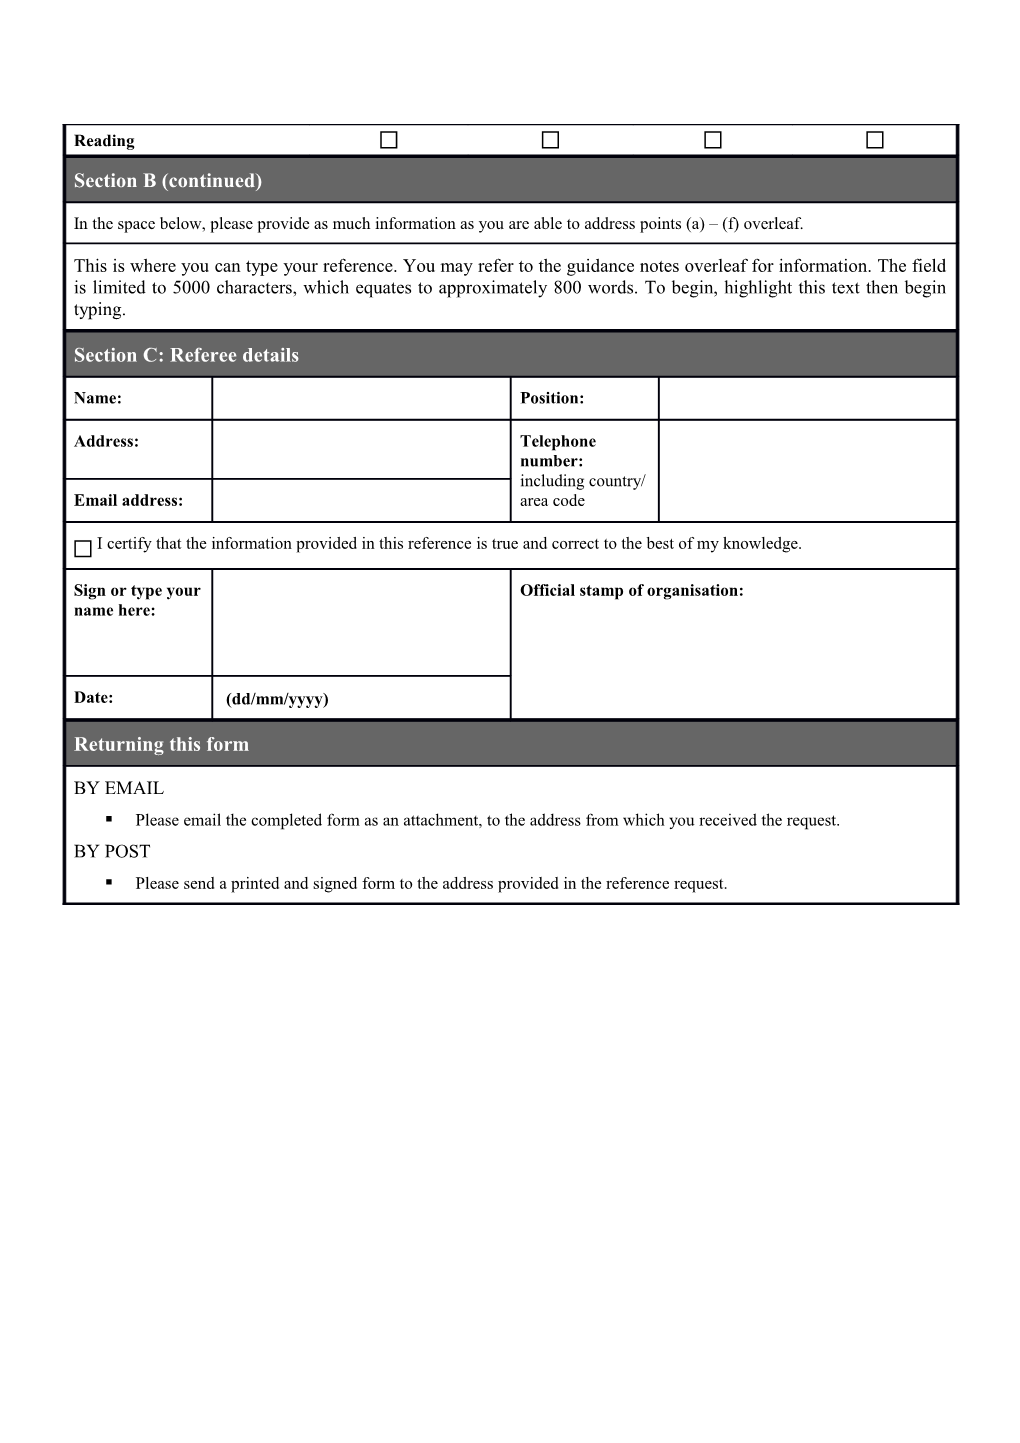 Lancaster University Postgraduate Reference Form